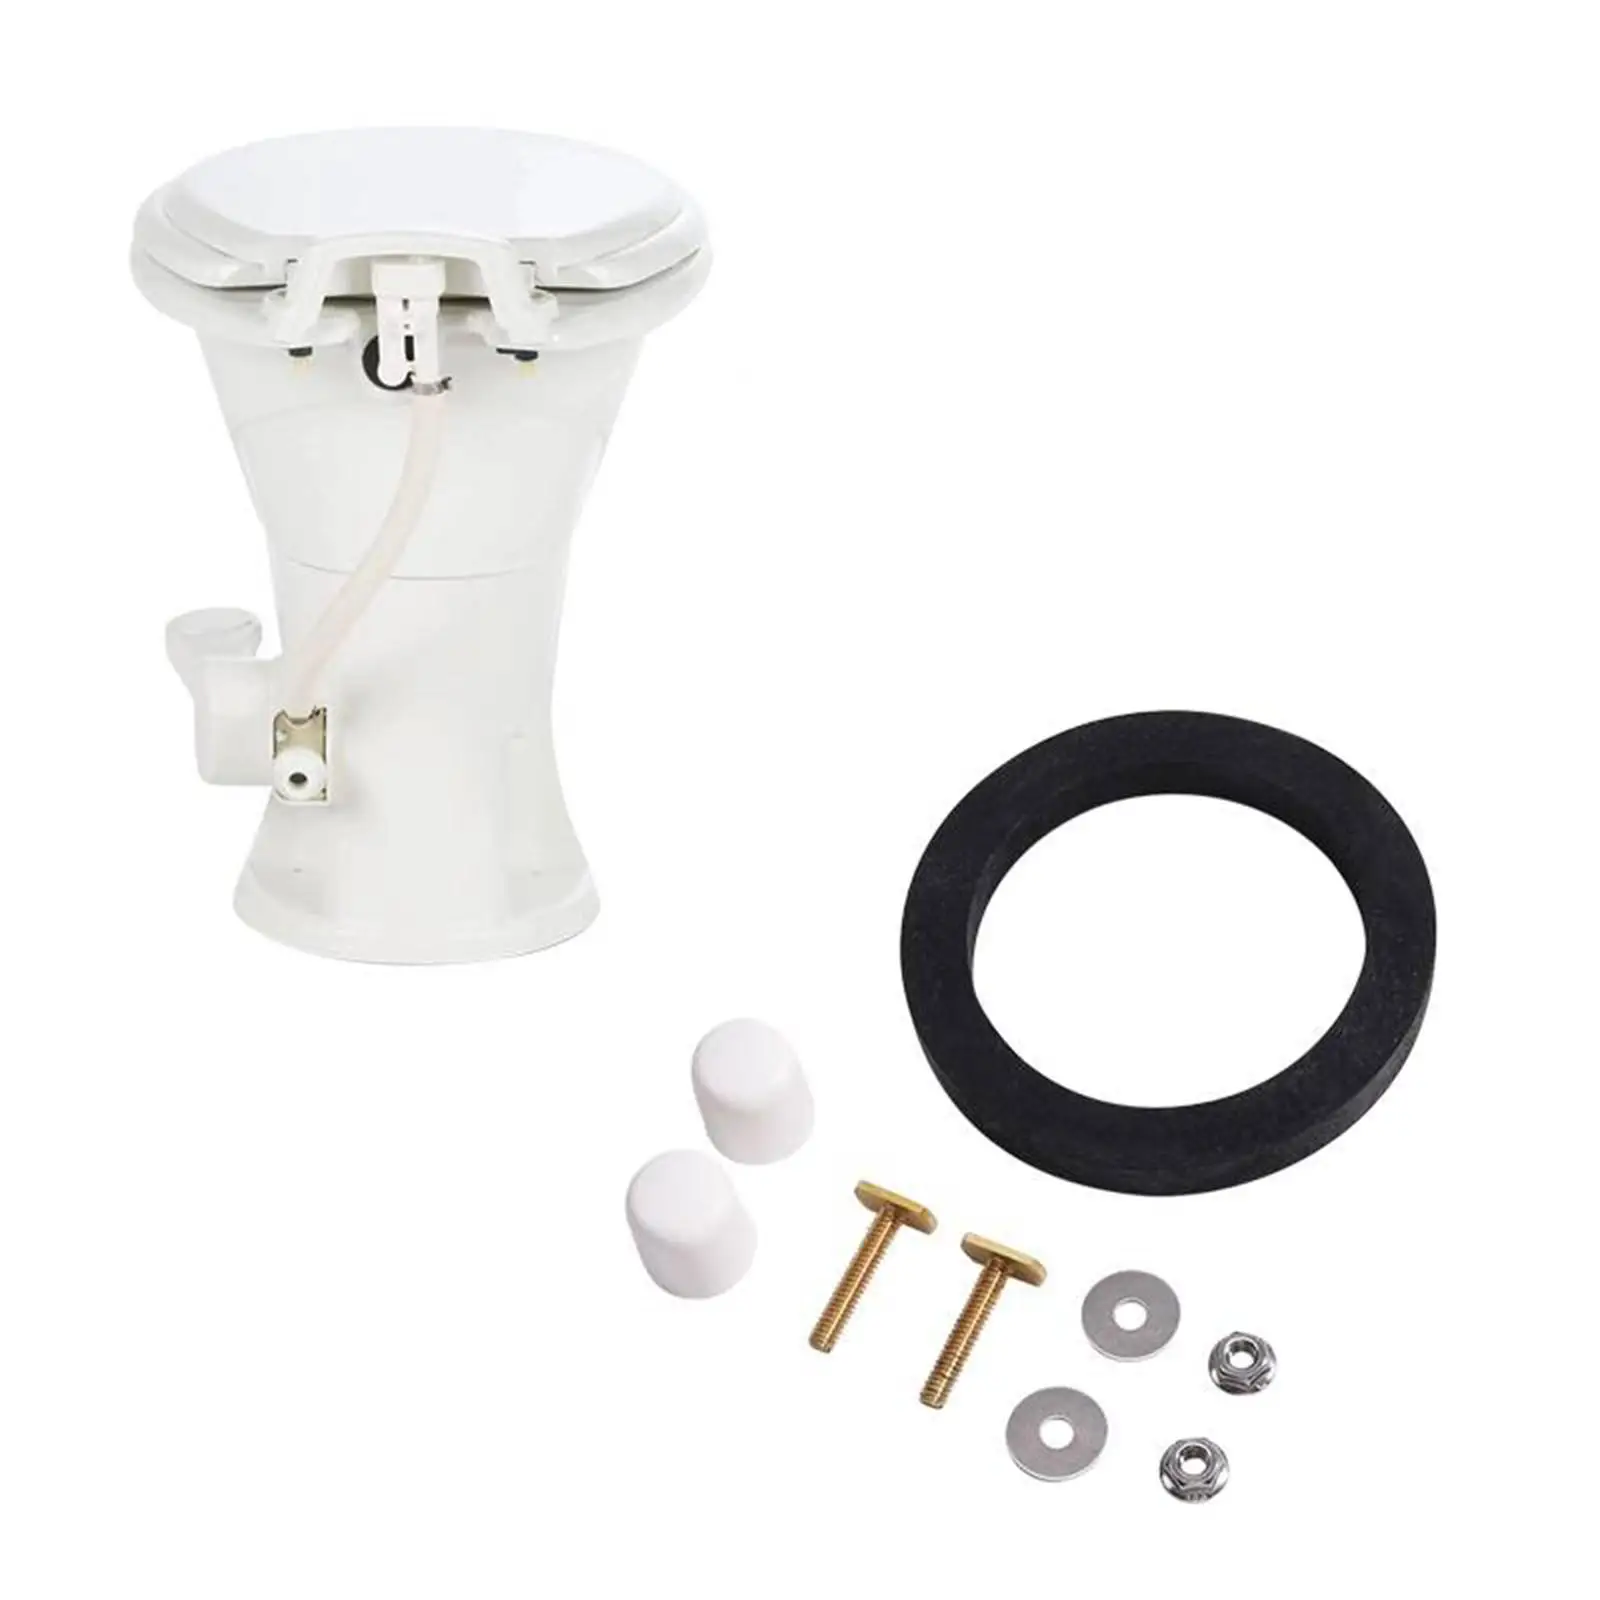 RV Toilet Seal Kit 385311652 Toilet Mounting Hardware Kit for Dometic 300 Series Toilets Toilet Accessory Easy to Install